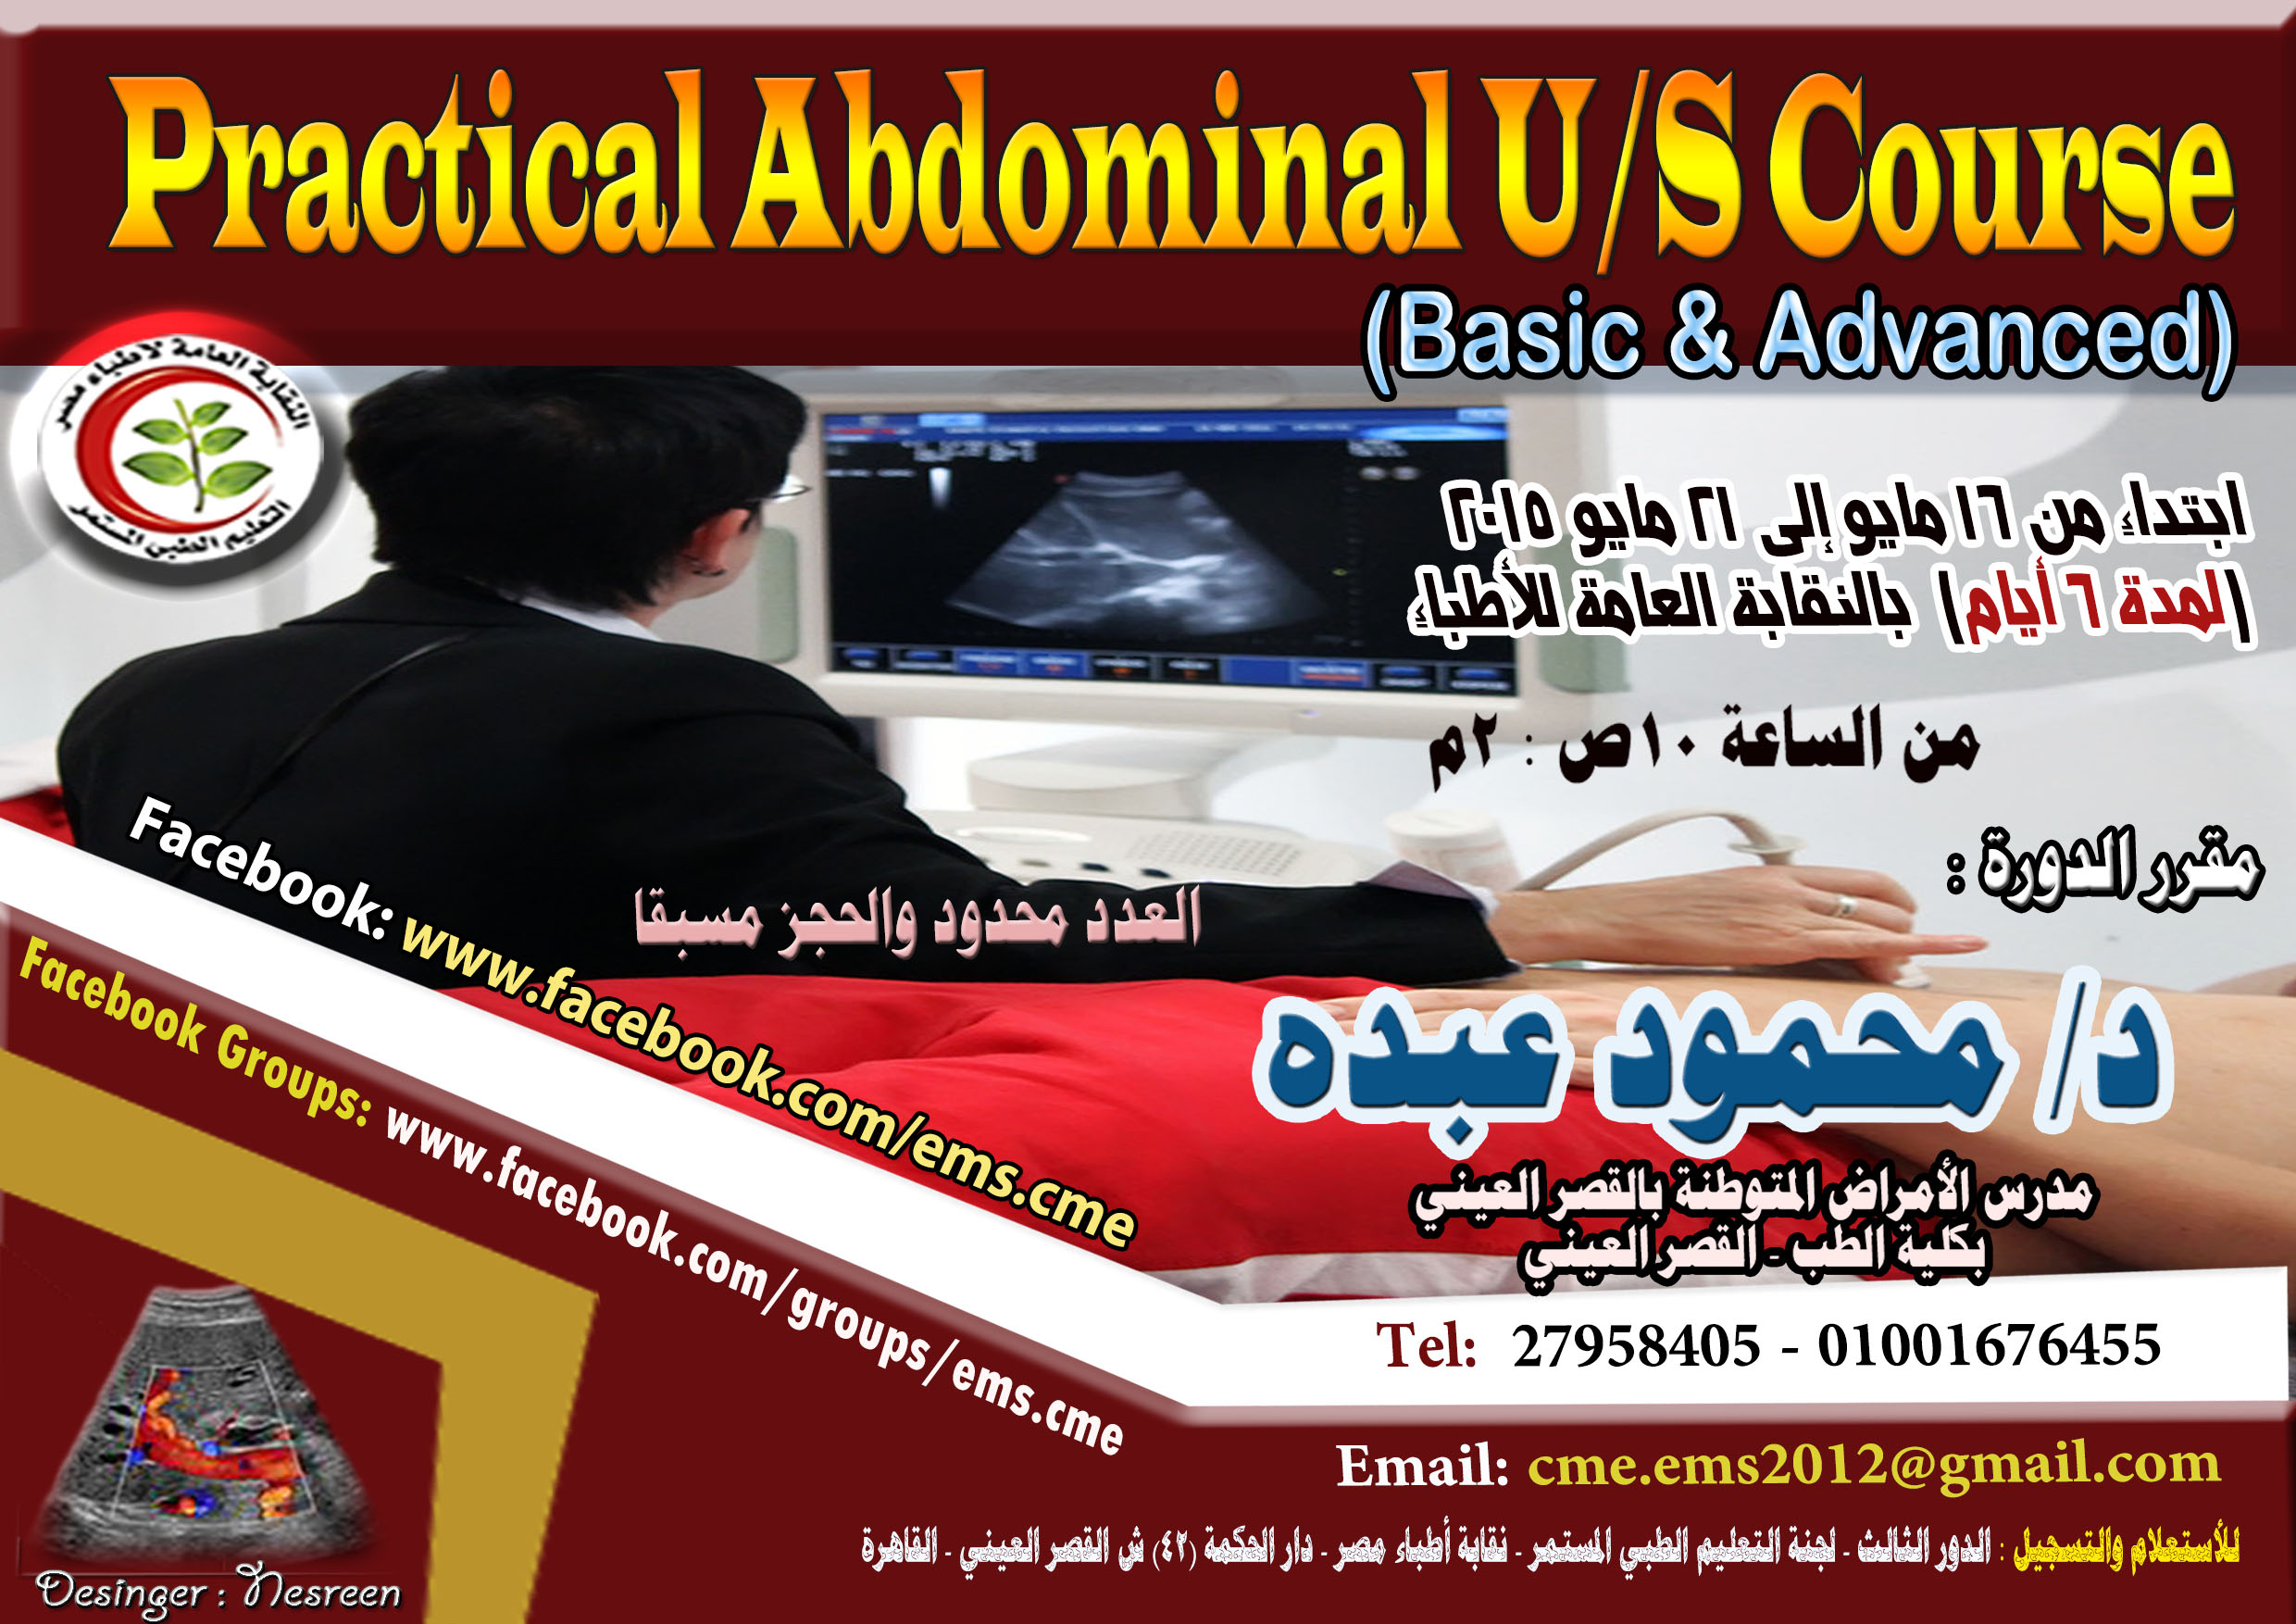 Practical Abdominal U/S Course  (Basic & Advanced)